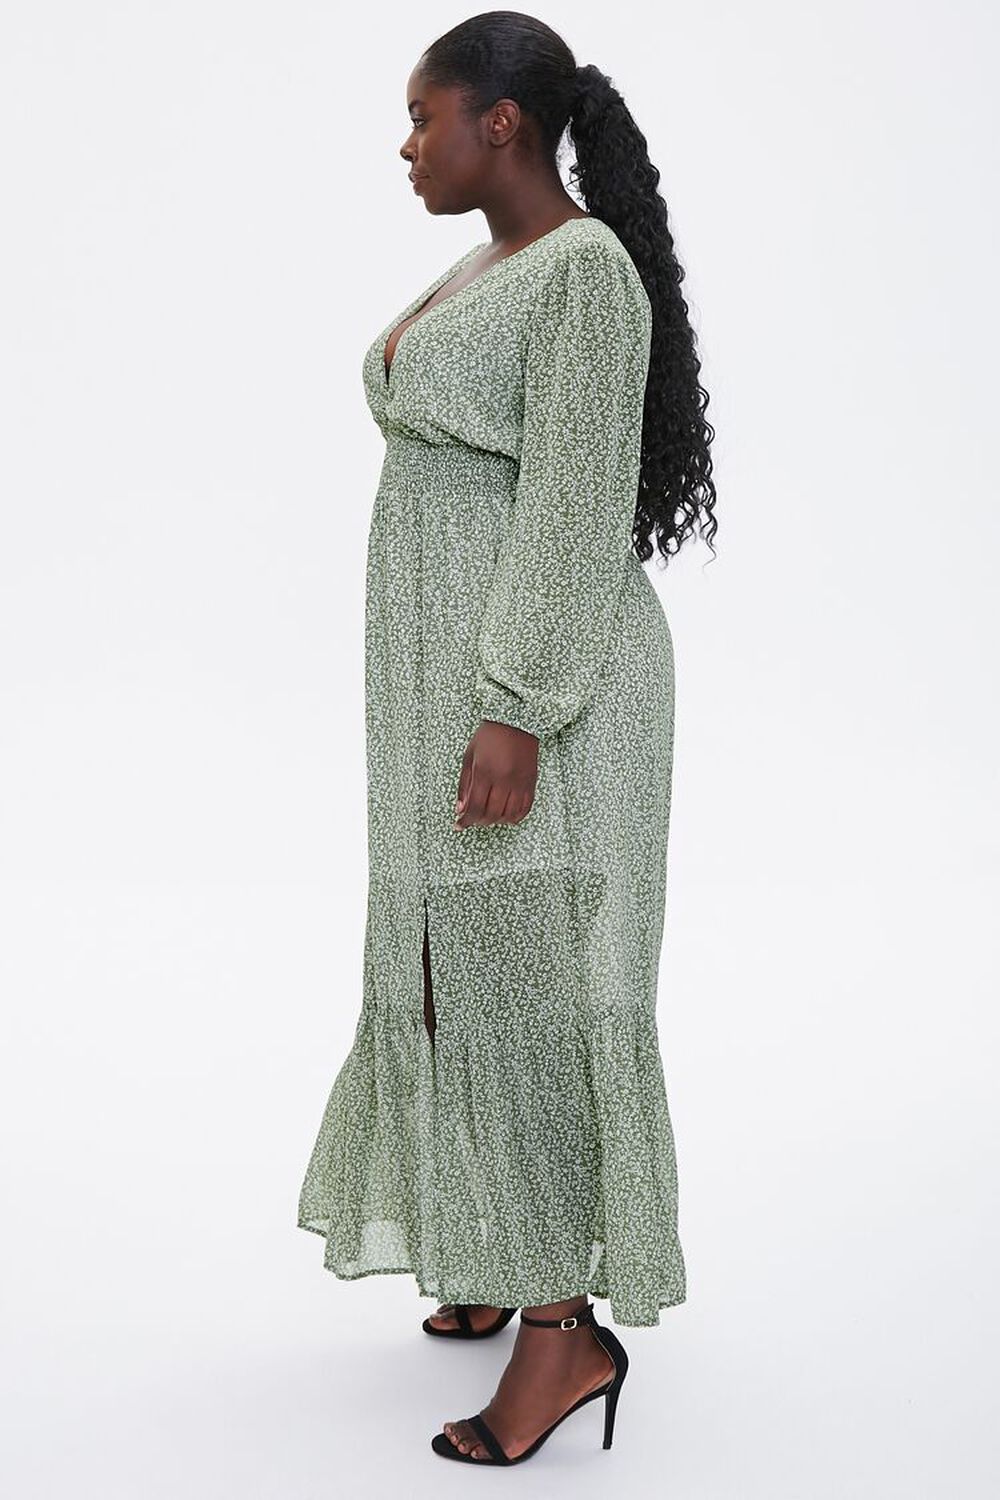 SAGE/CREAM Plus Size Floral Peasant Maxi Dress, image 2